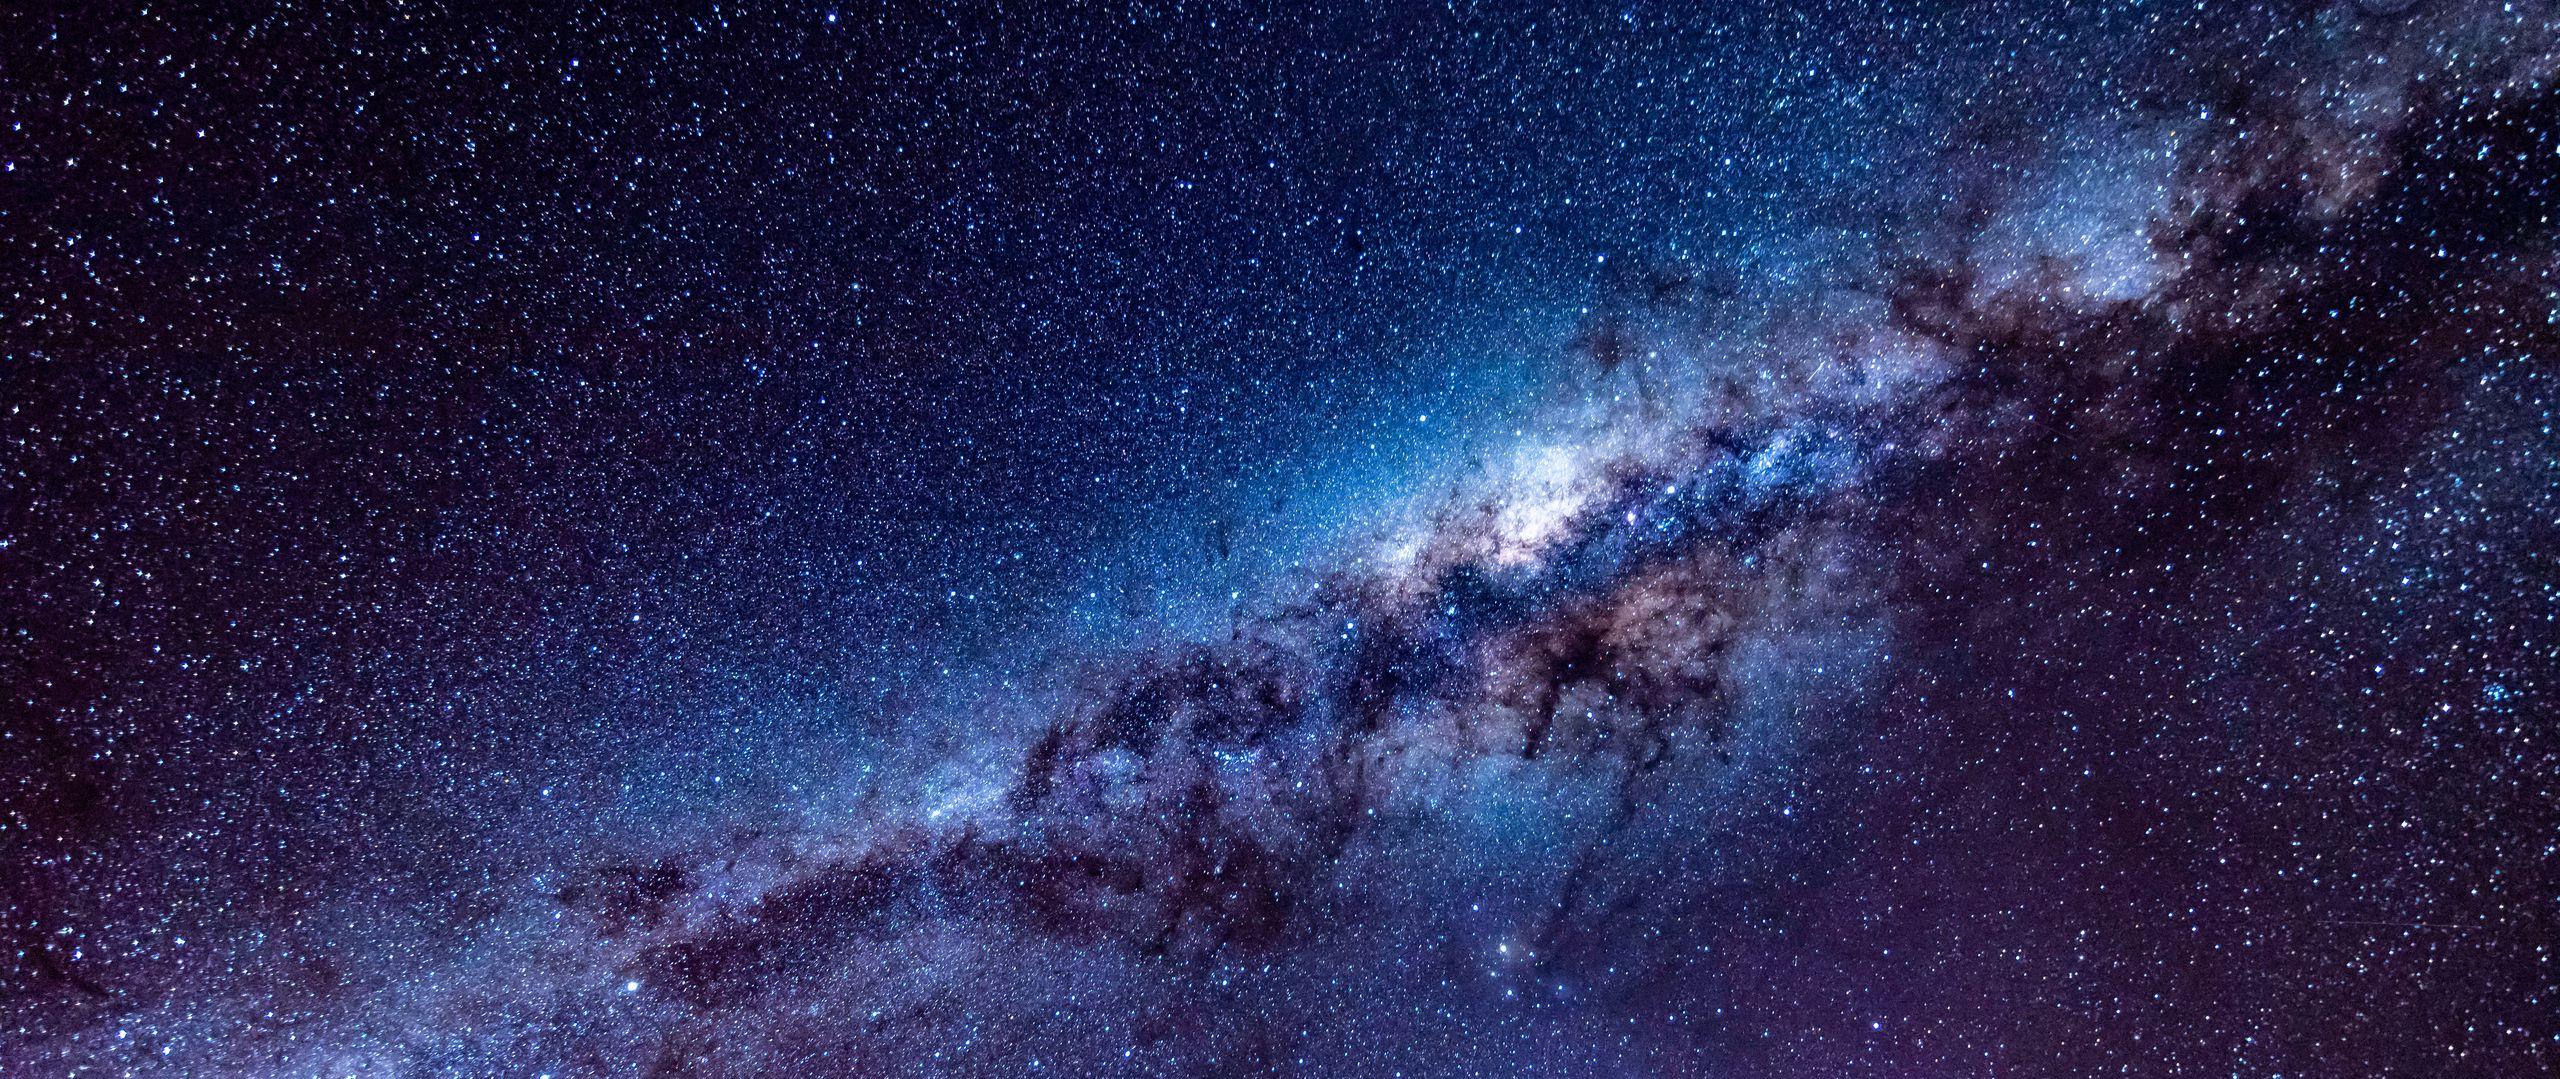 Download wallpaper 2560x1080 milky way starry sky stars space